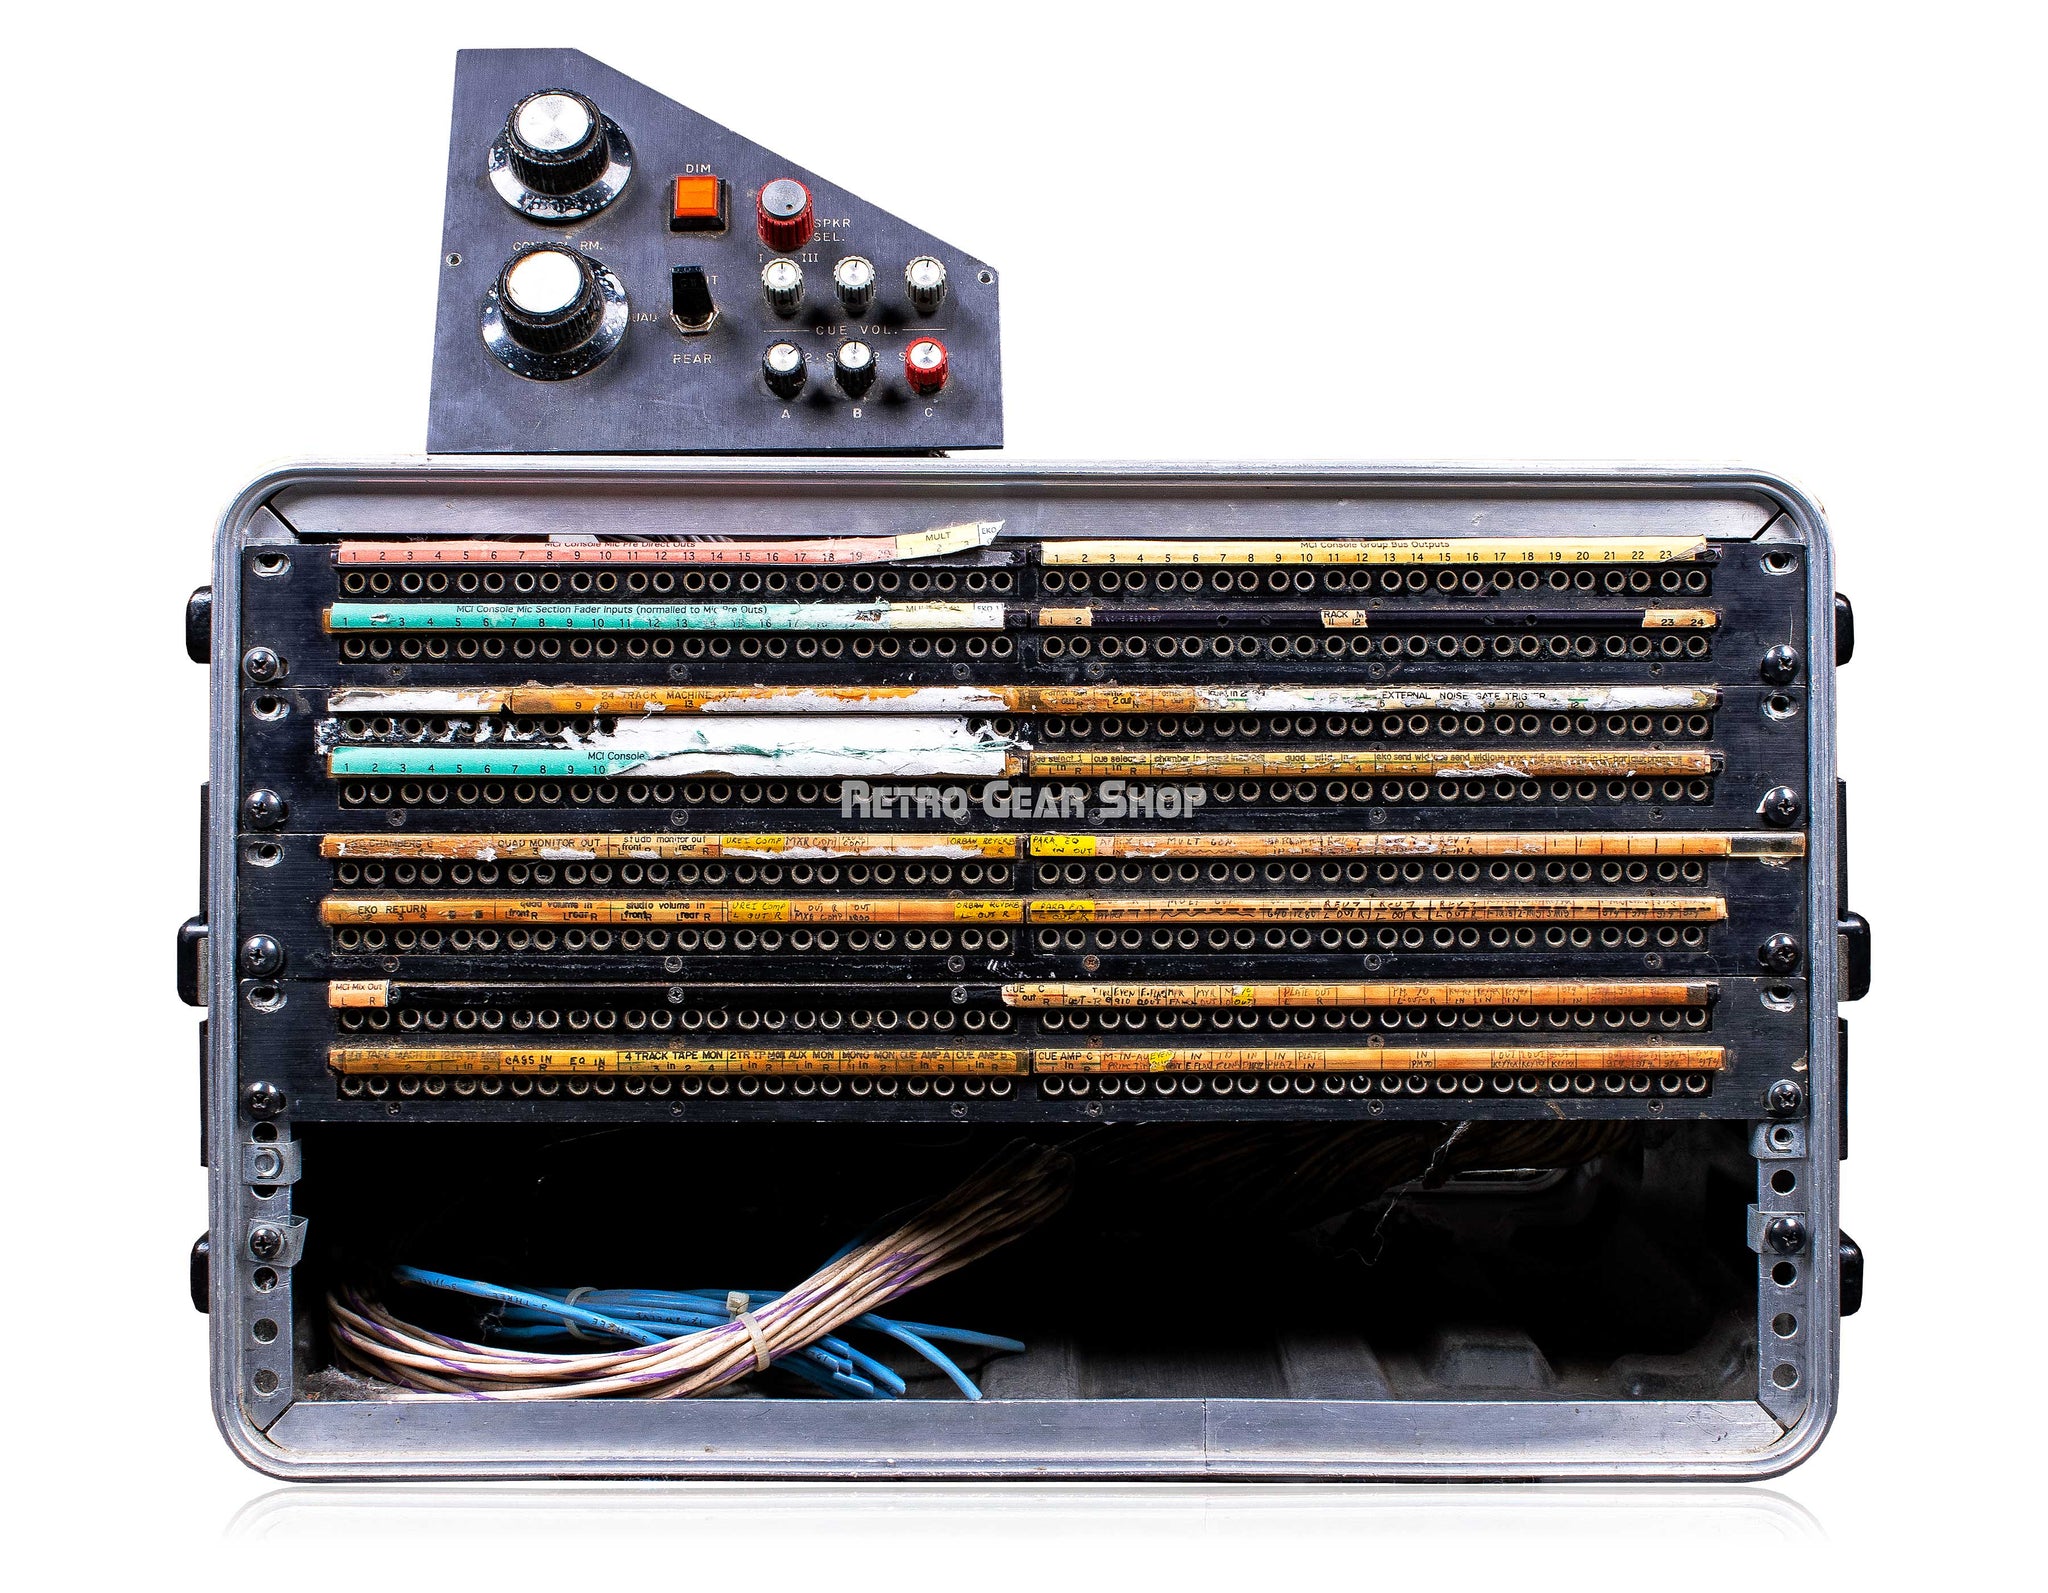 MCI Criteria Historic Recording Console Rare Vintage Analog Mixer Patchbay